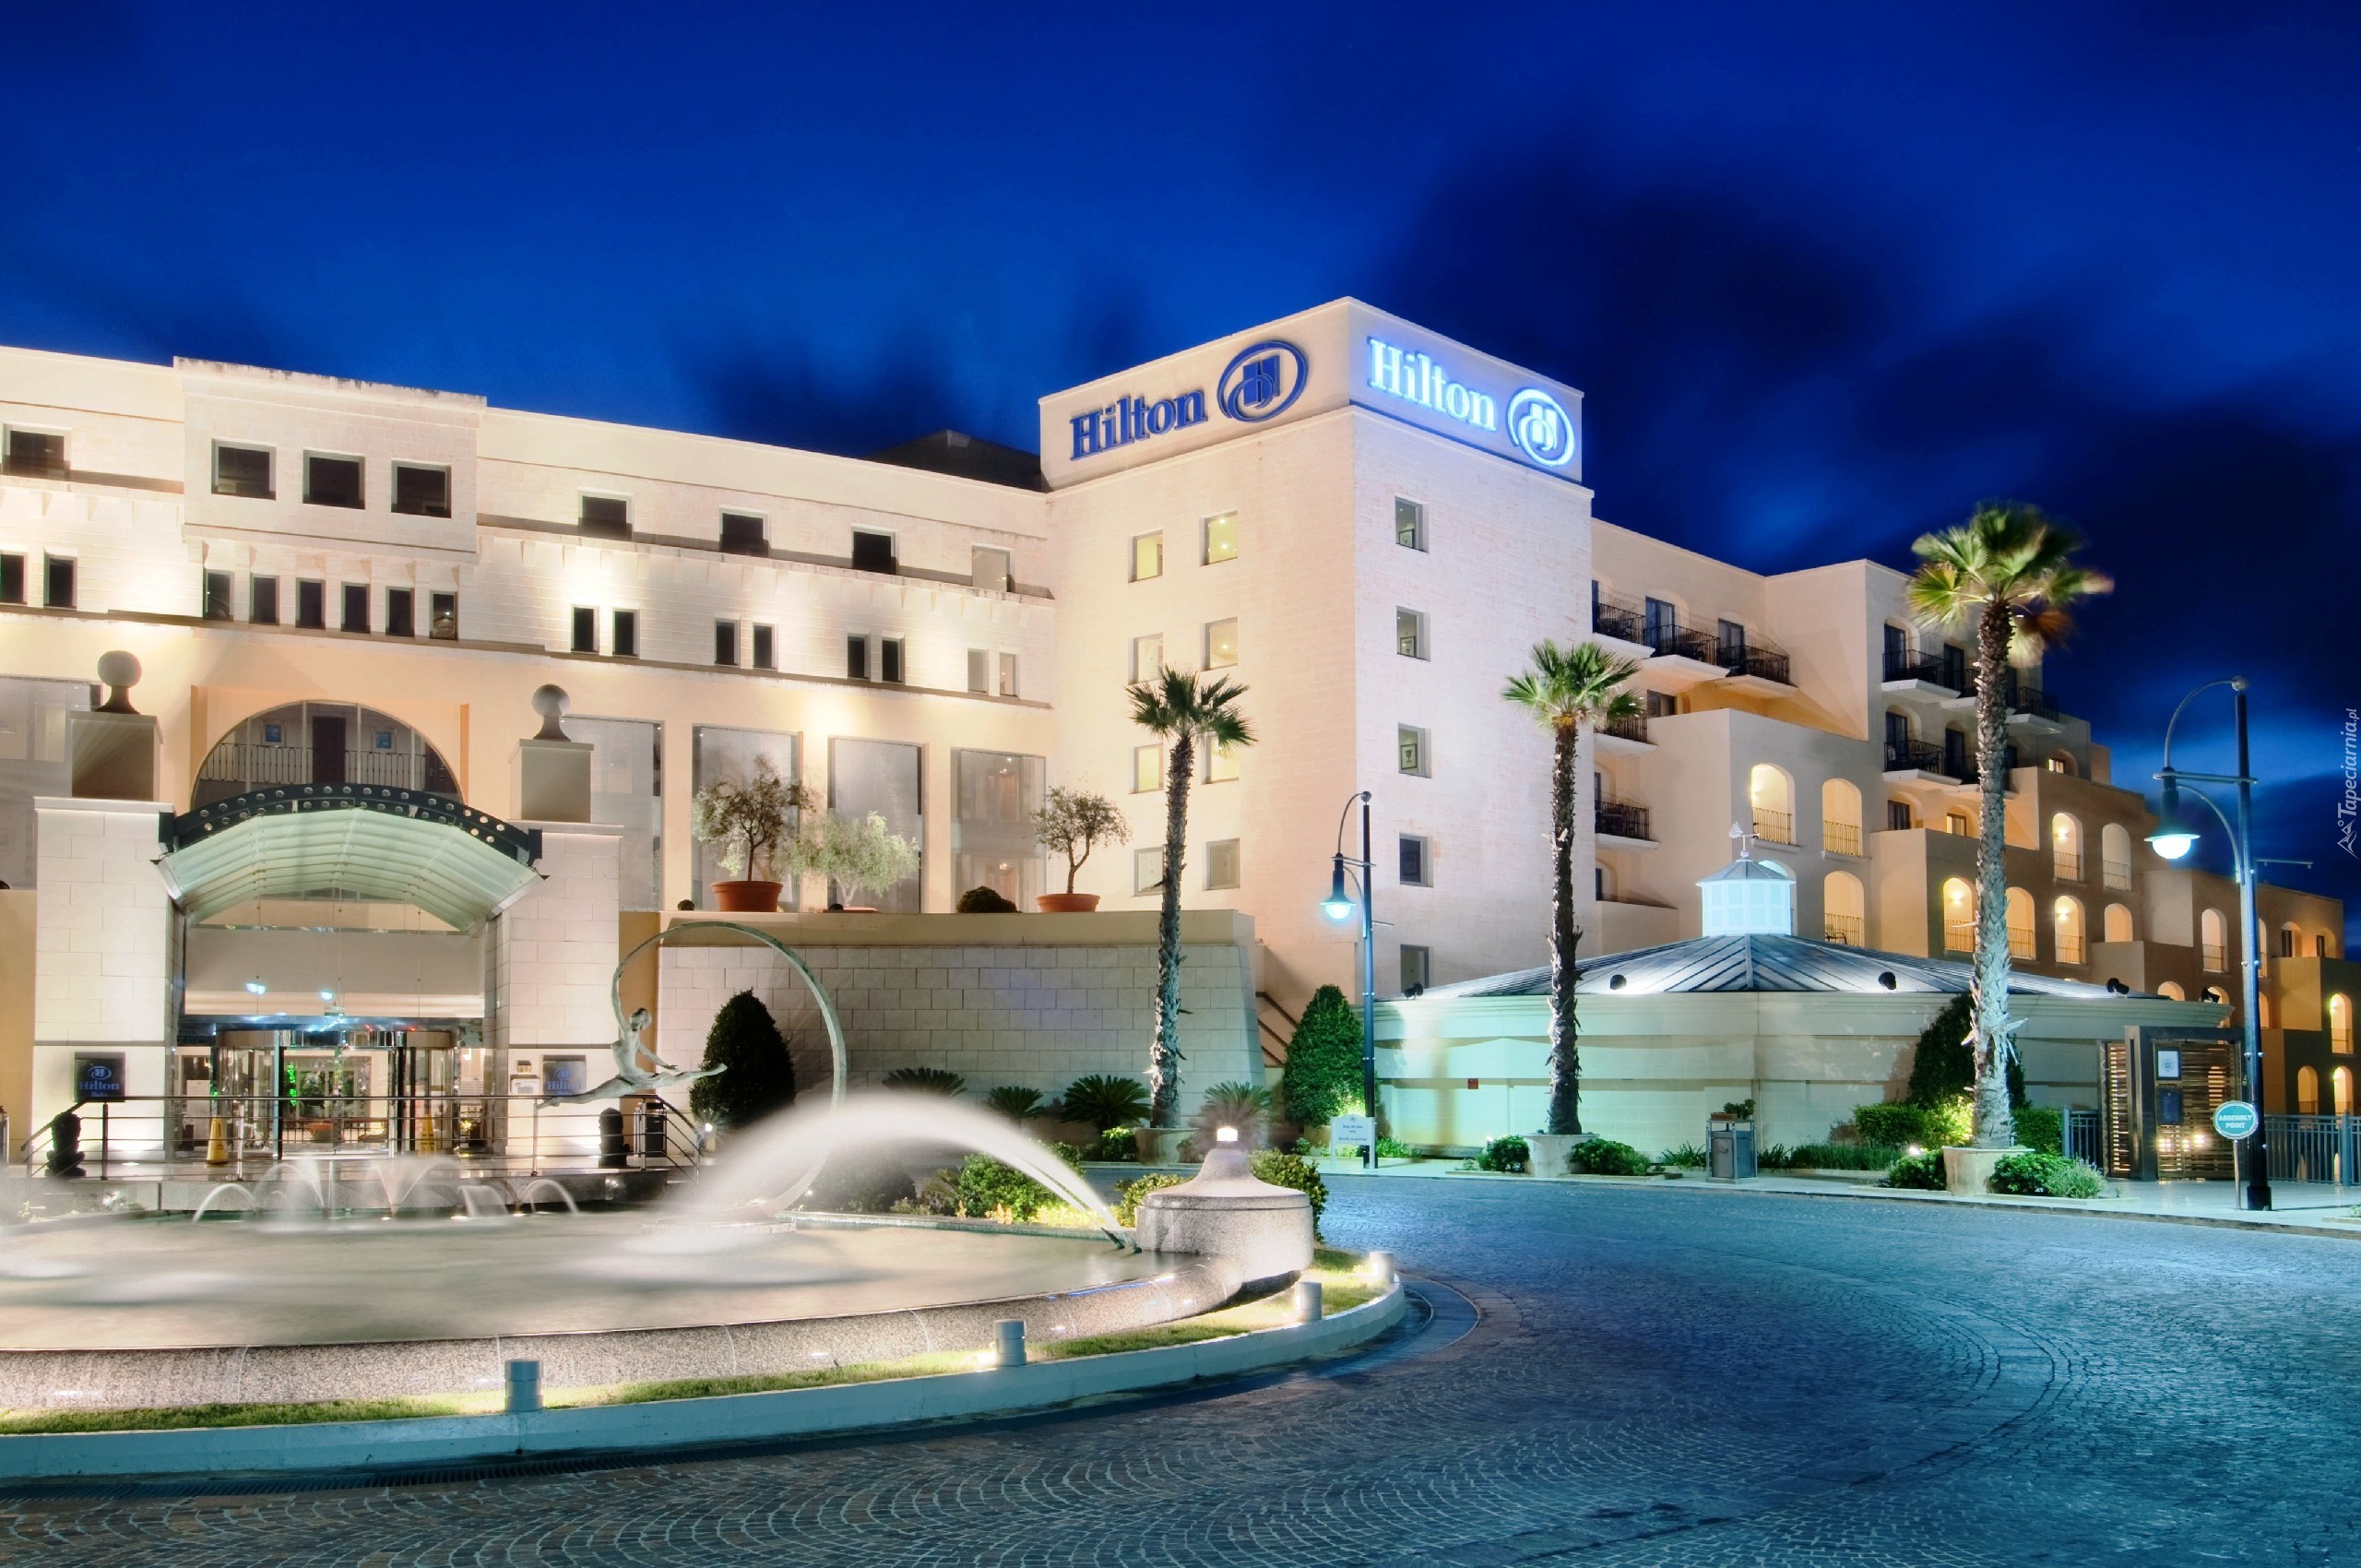 Hotel, Hilton, Fontanna